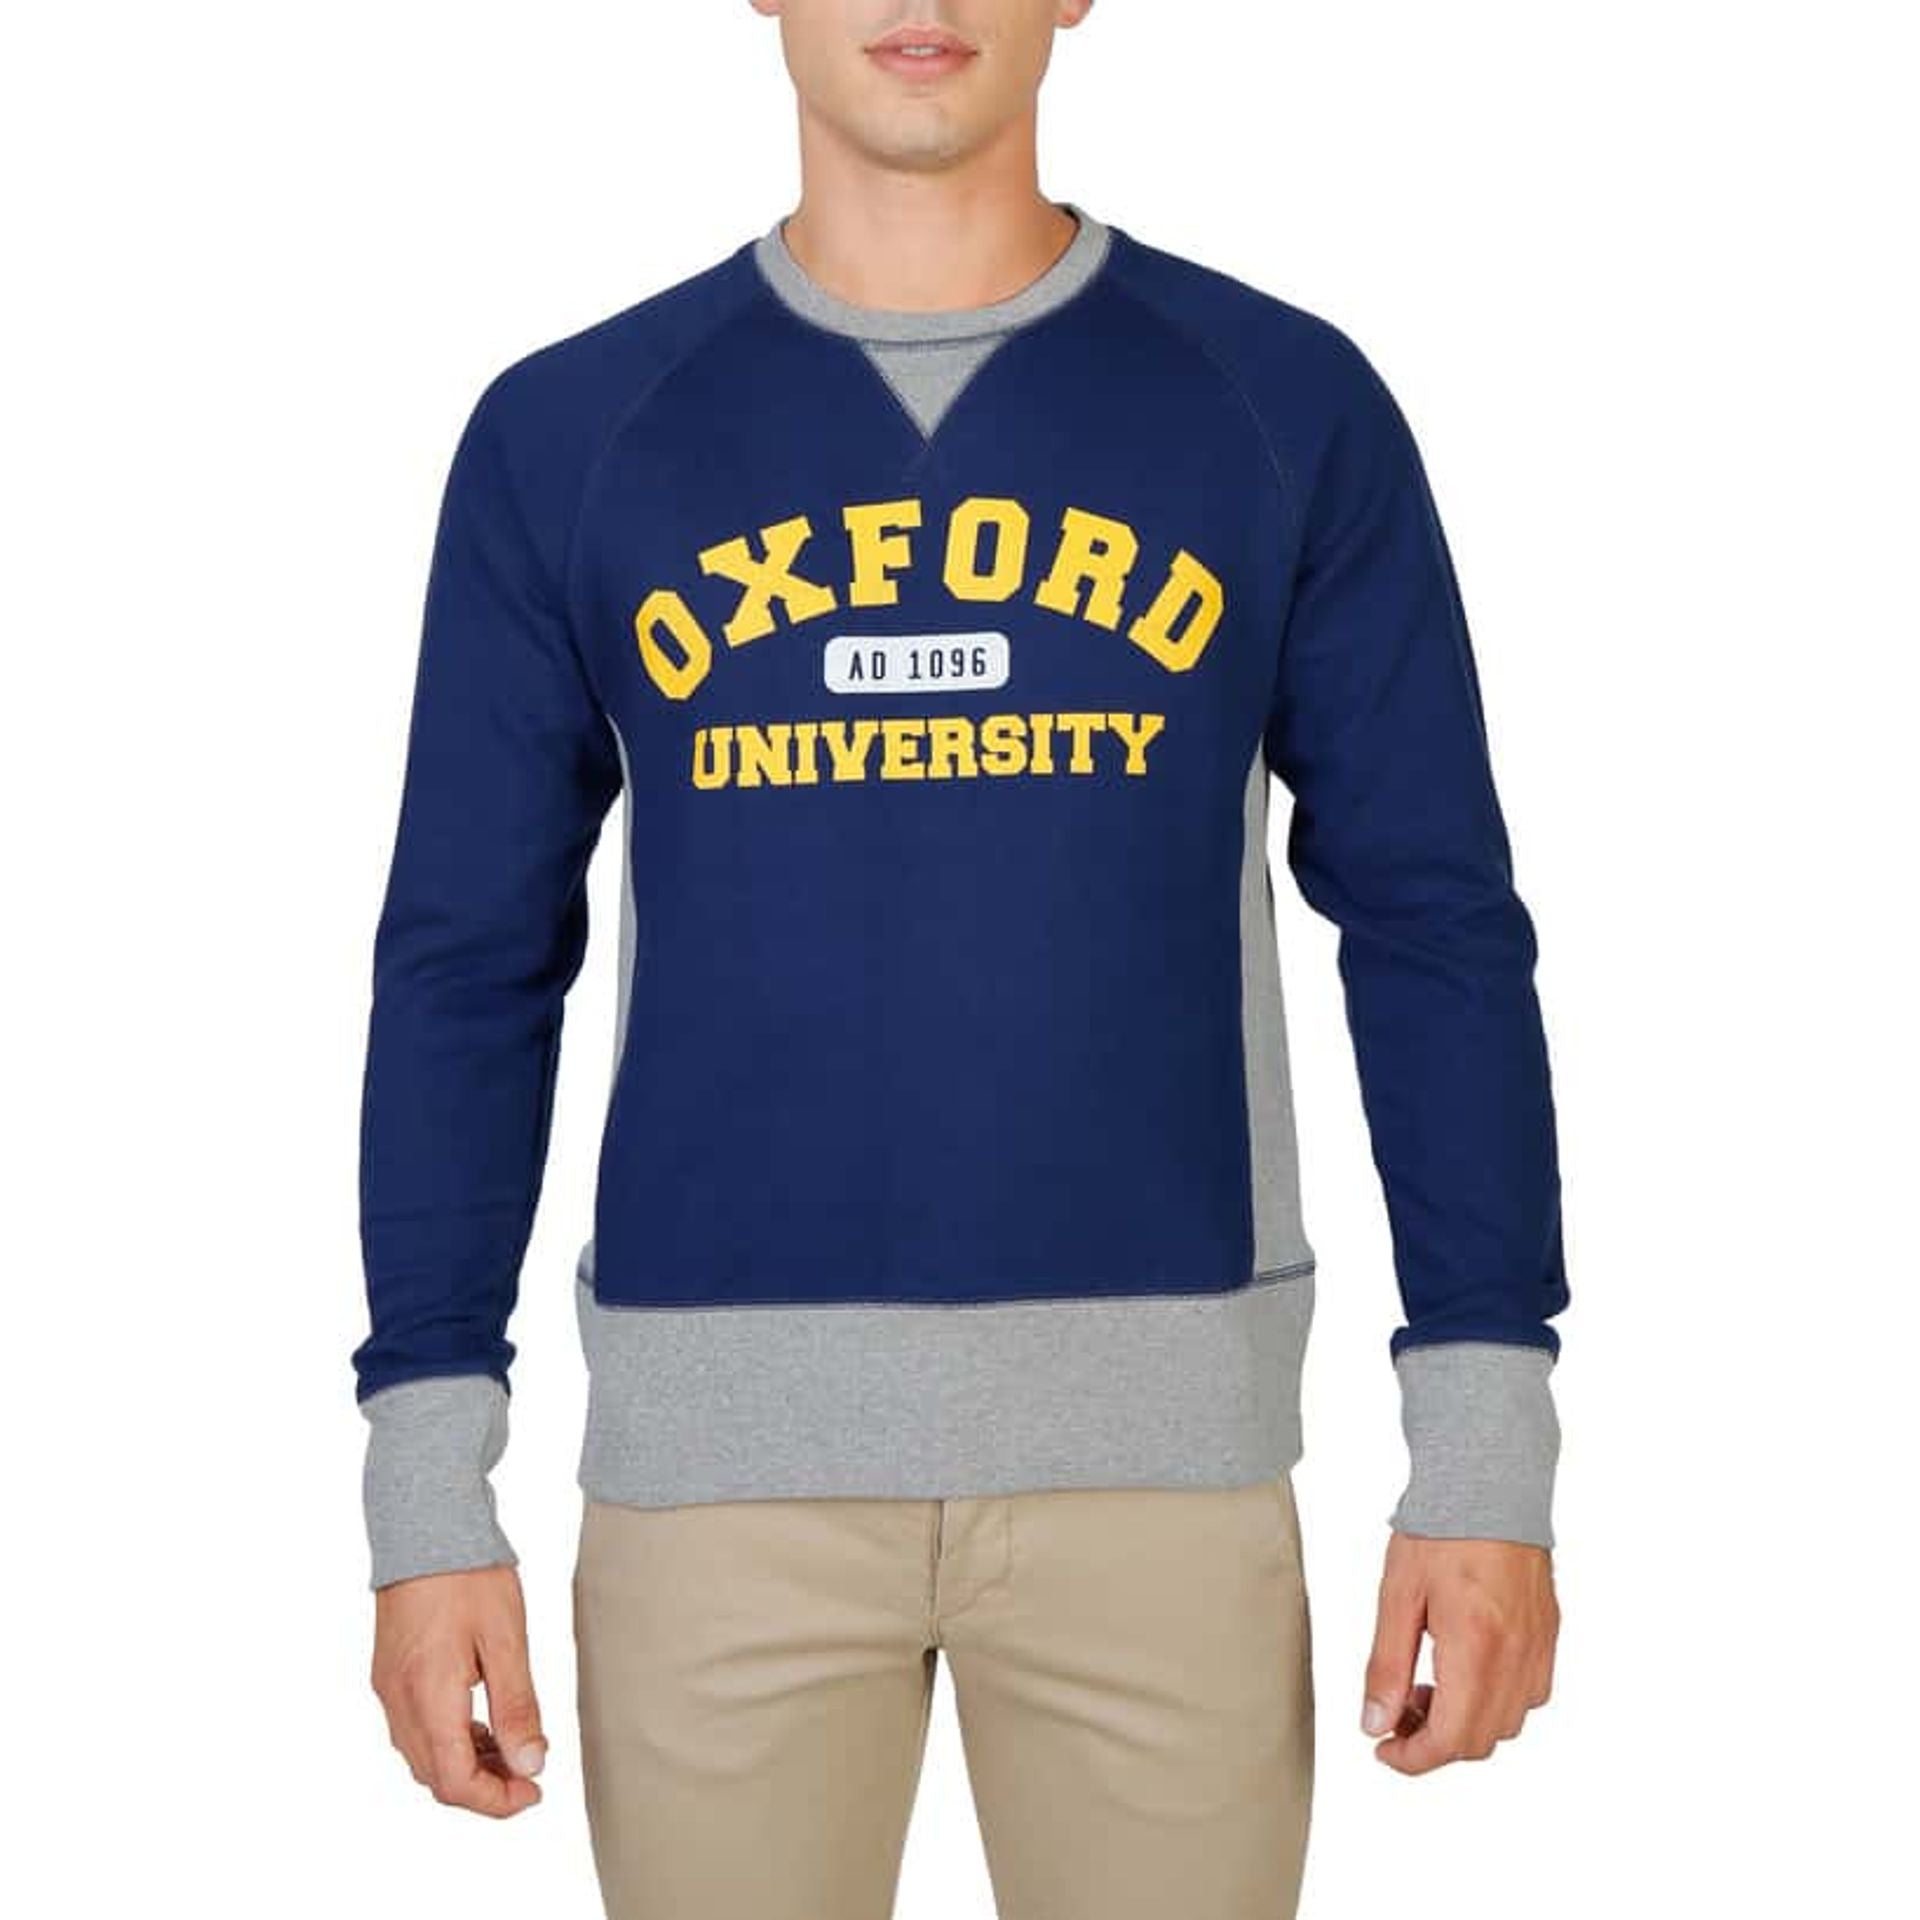 Oxford University Sweatshirts